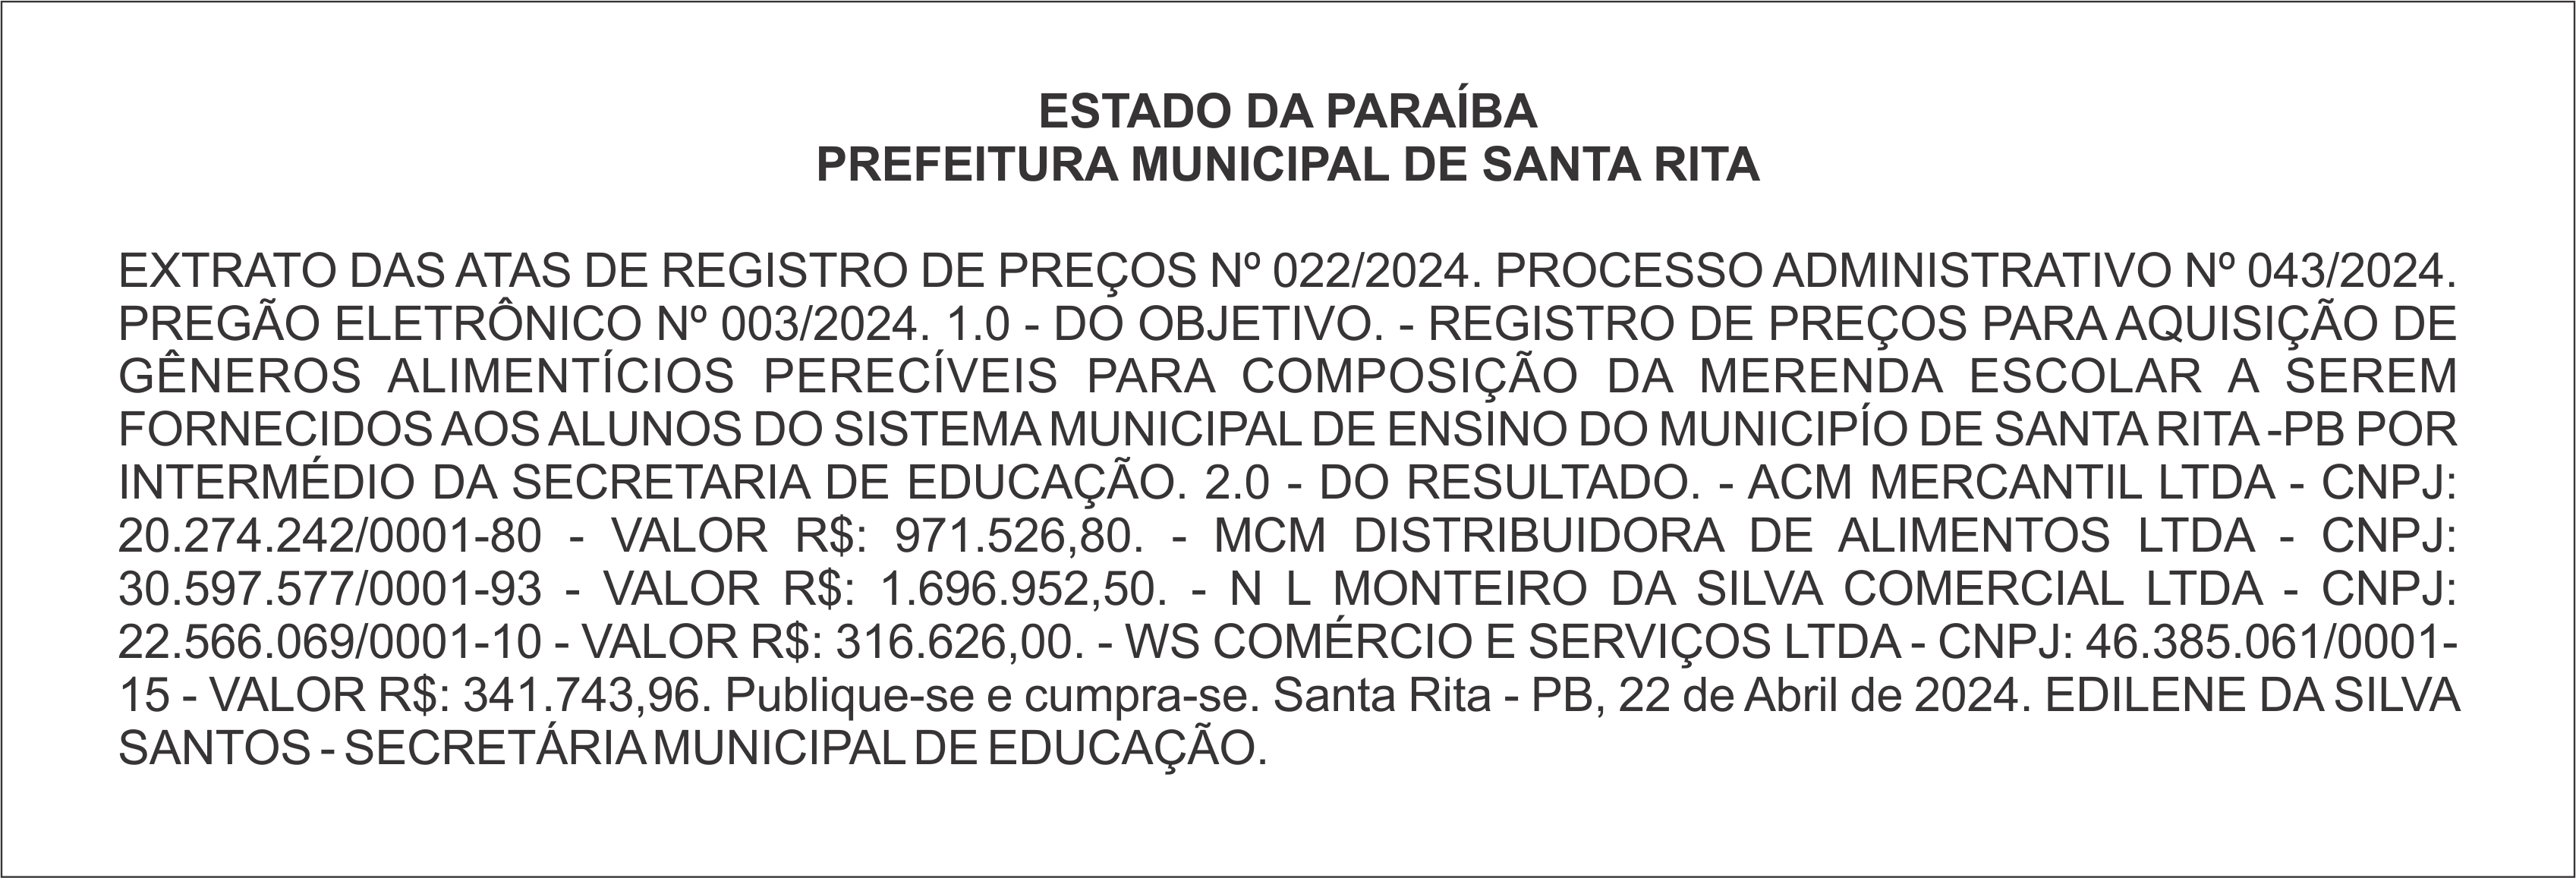 PREFEITURA MUNICIPAL DE SANTA RITA – EXTRATO DAS ATAS DE REGISTRO DE PREÇOS Nº 022/2024.